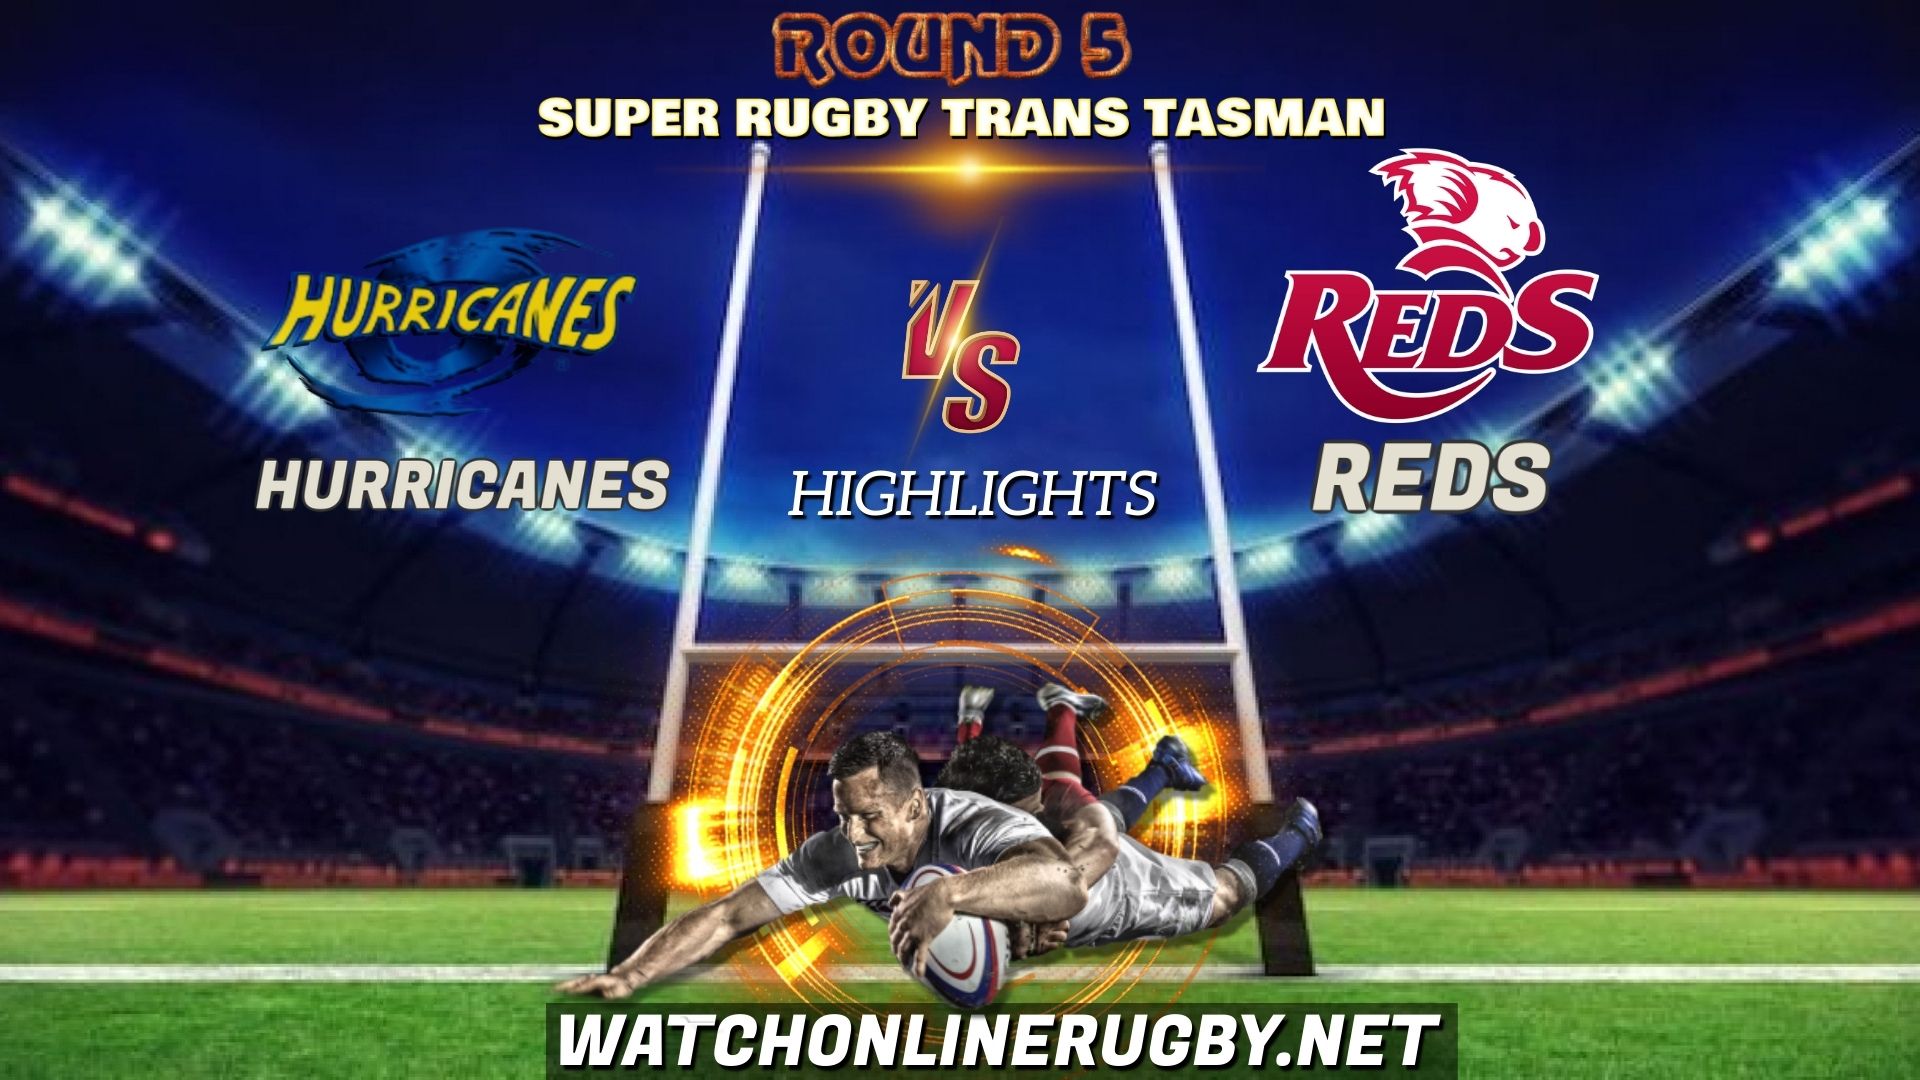 Hurricanes Vs Reds Super Rugby Trans Tasman 2021 RD 5